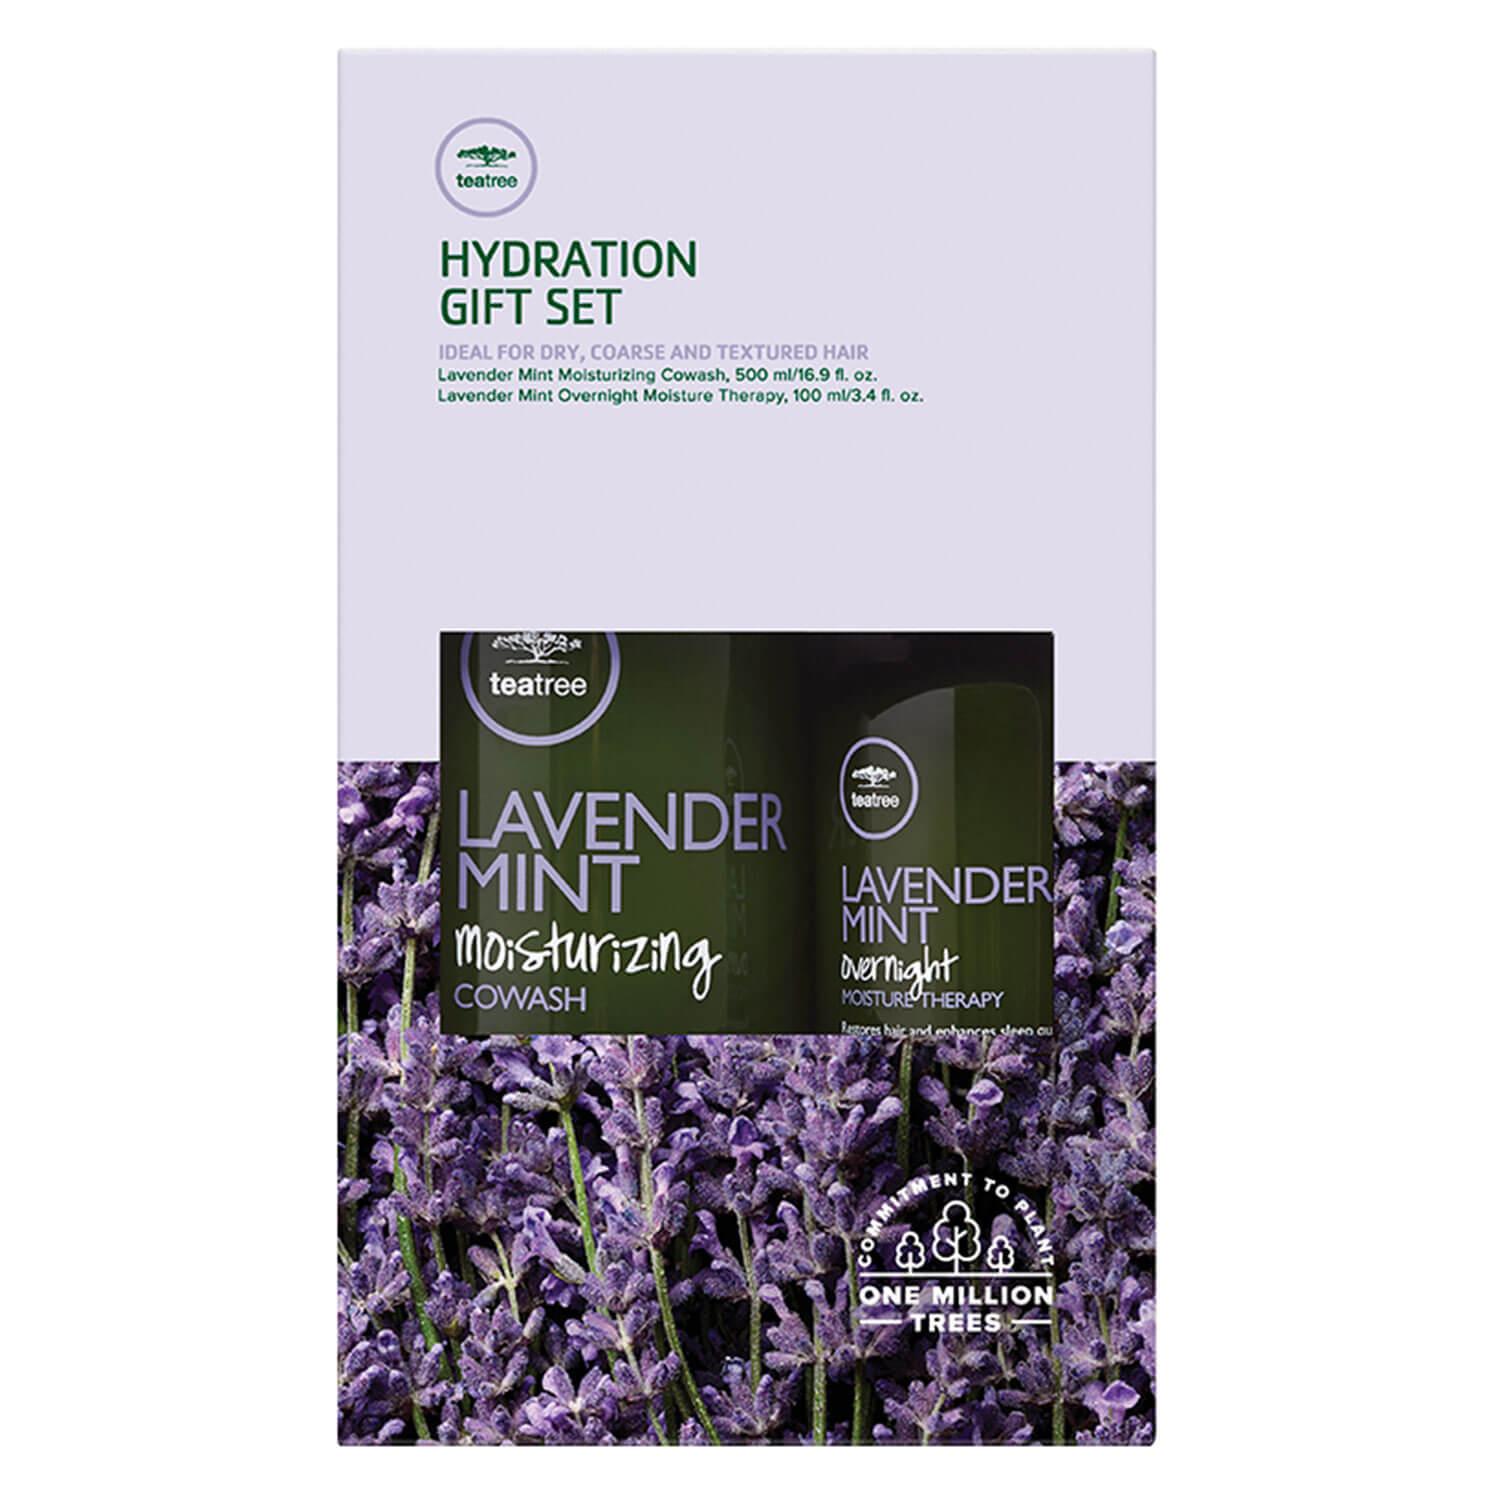 Tea Tree Lavender Mint - Hydration Gift Set